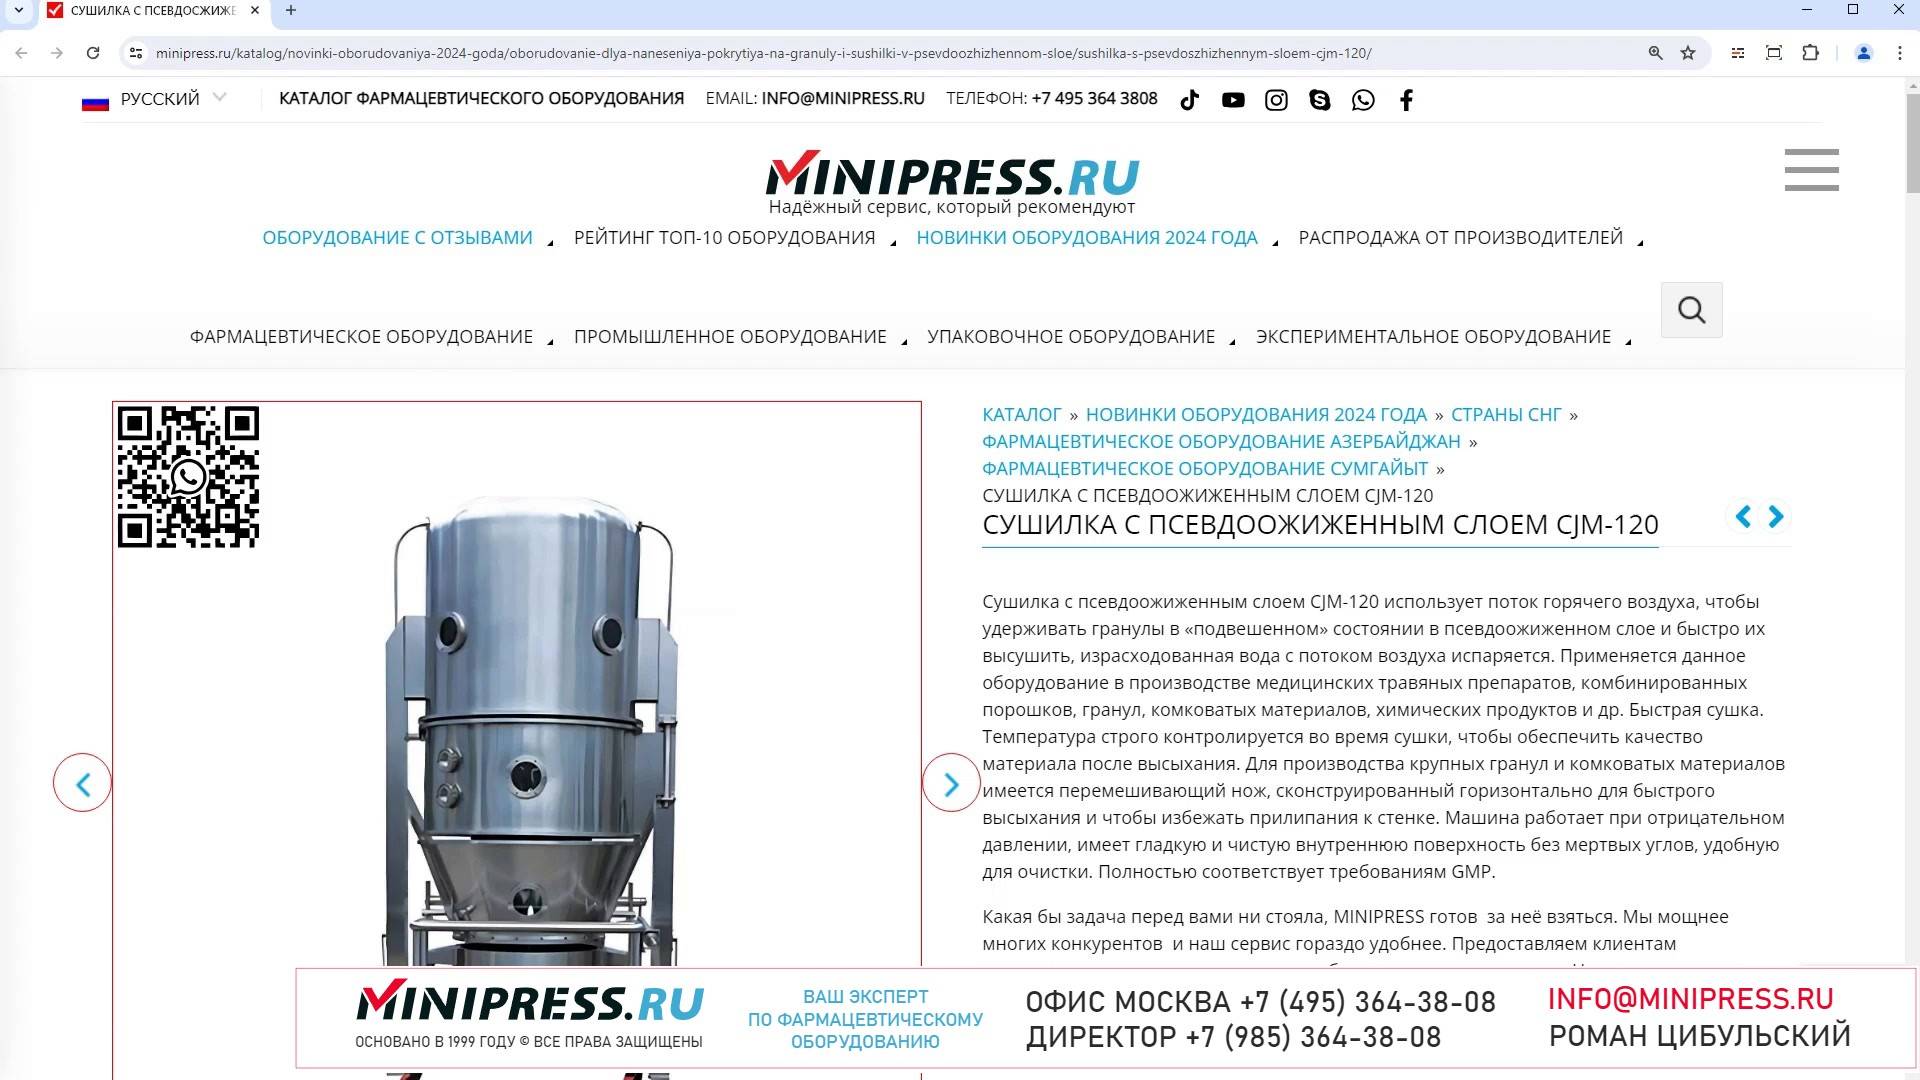 Minipress.ru Сушилка с псевдоожиженным слоем CJM-120